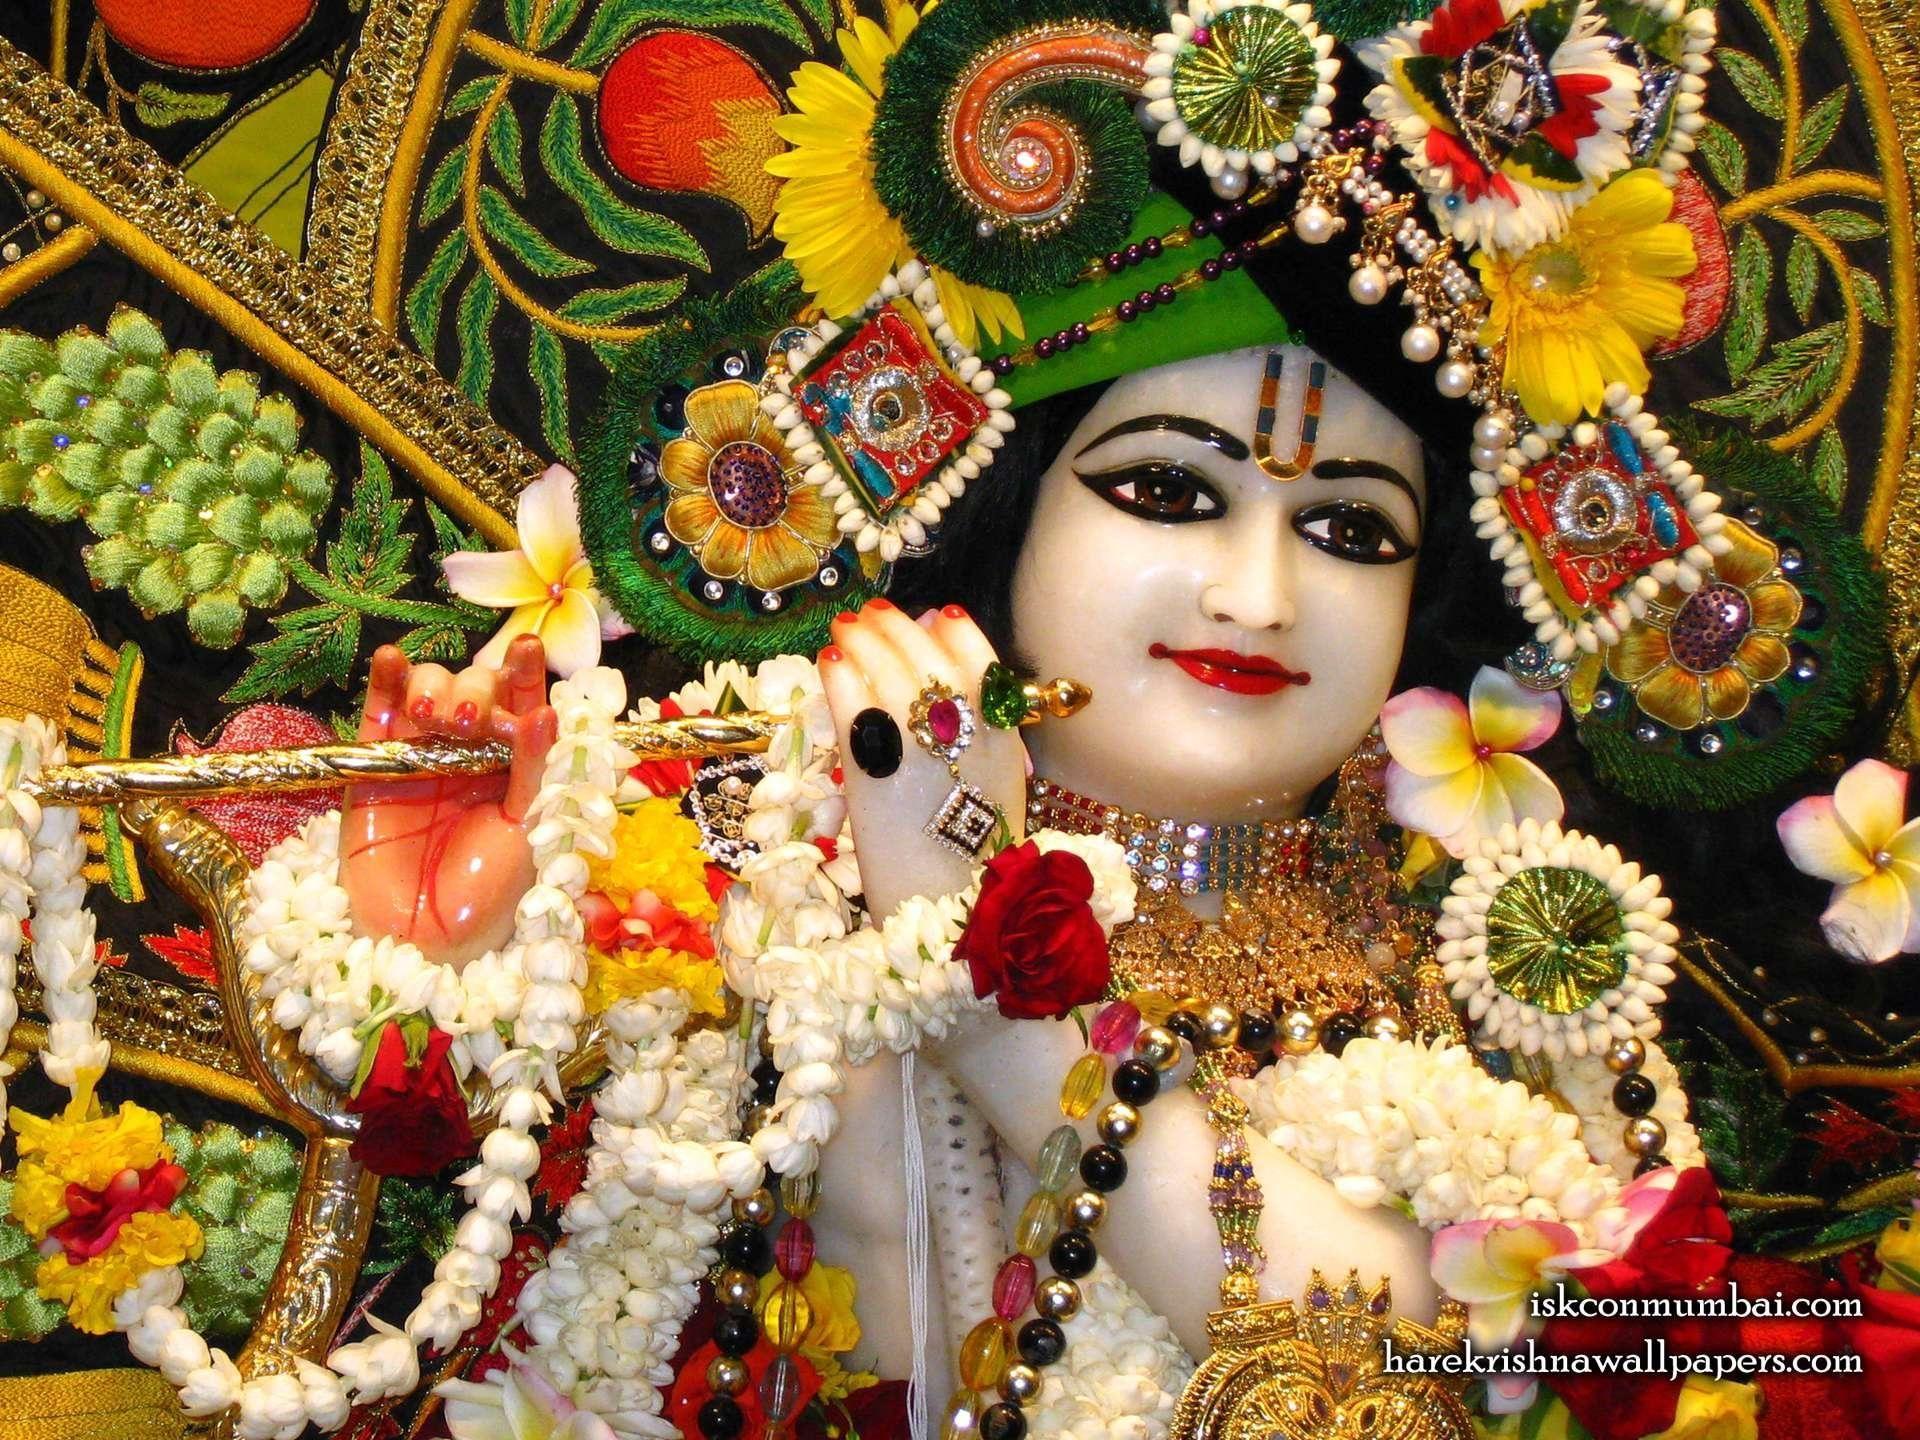 Shri Krishna Wallpaper, High Quality Pics of Shri Krishna